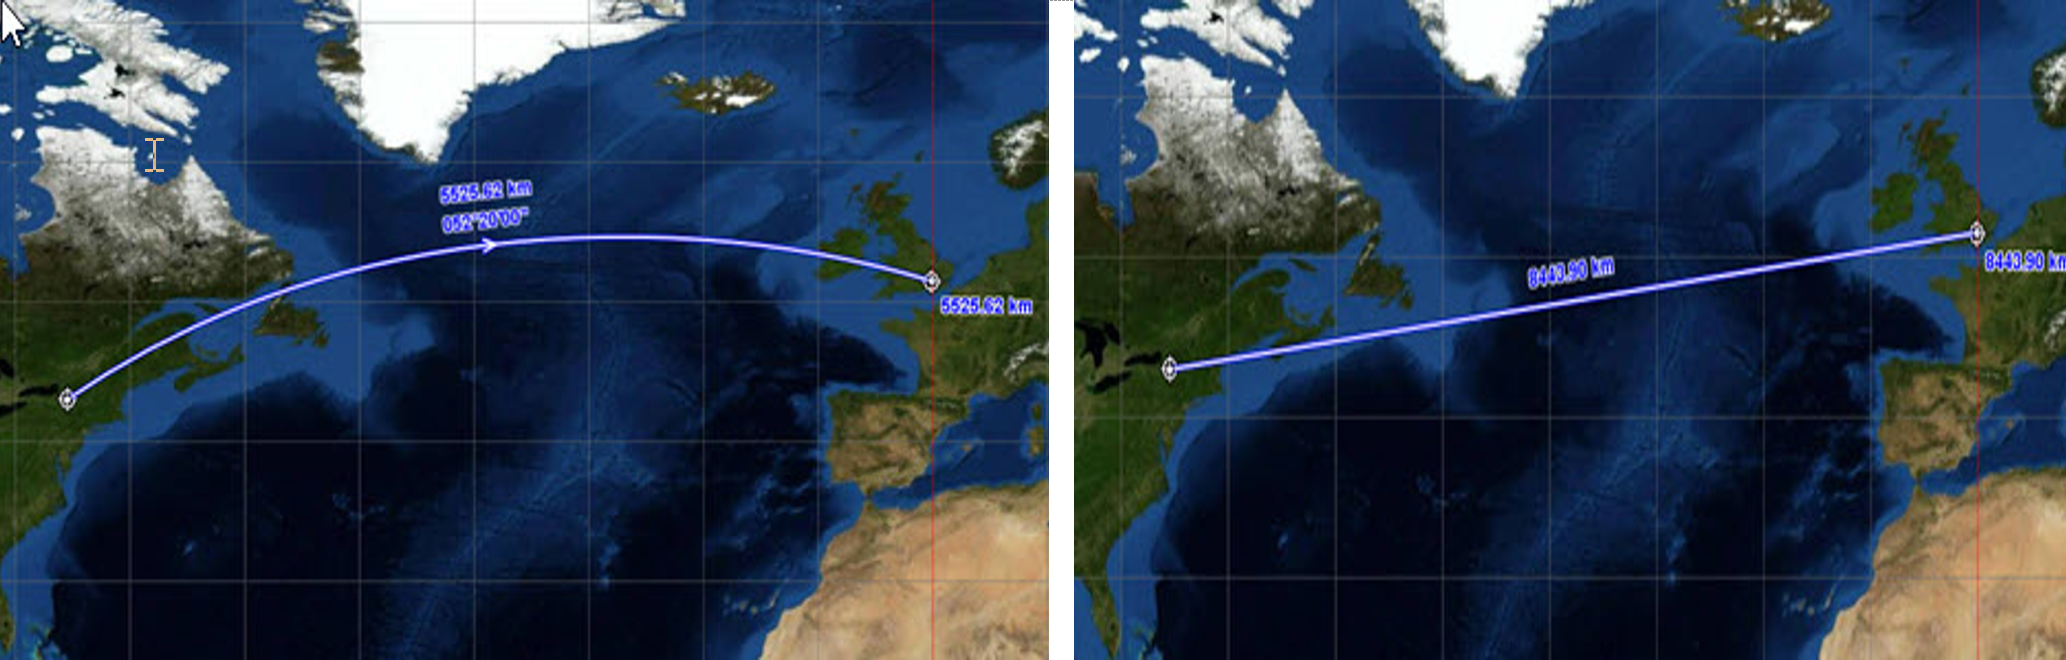 Geodesic flight path vs. cartesian flight path